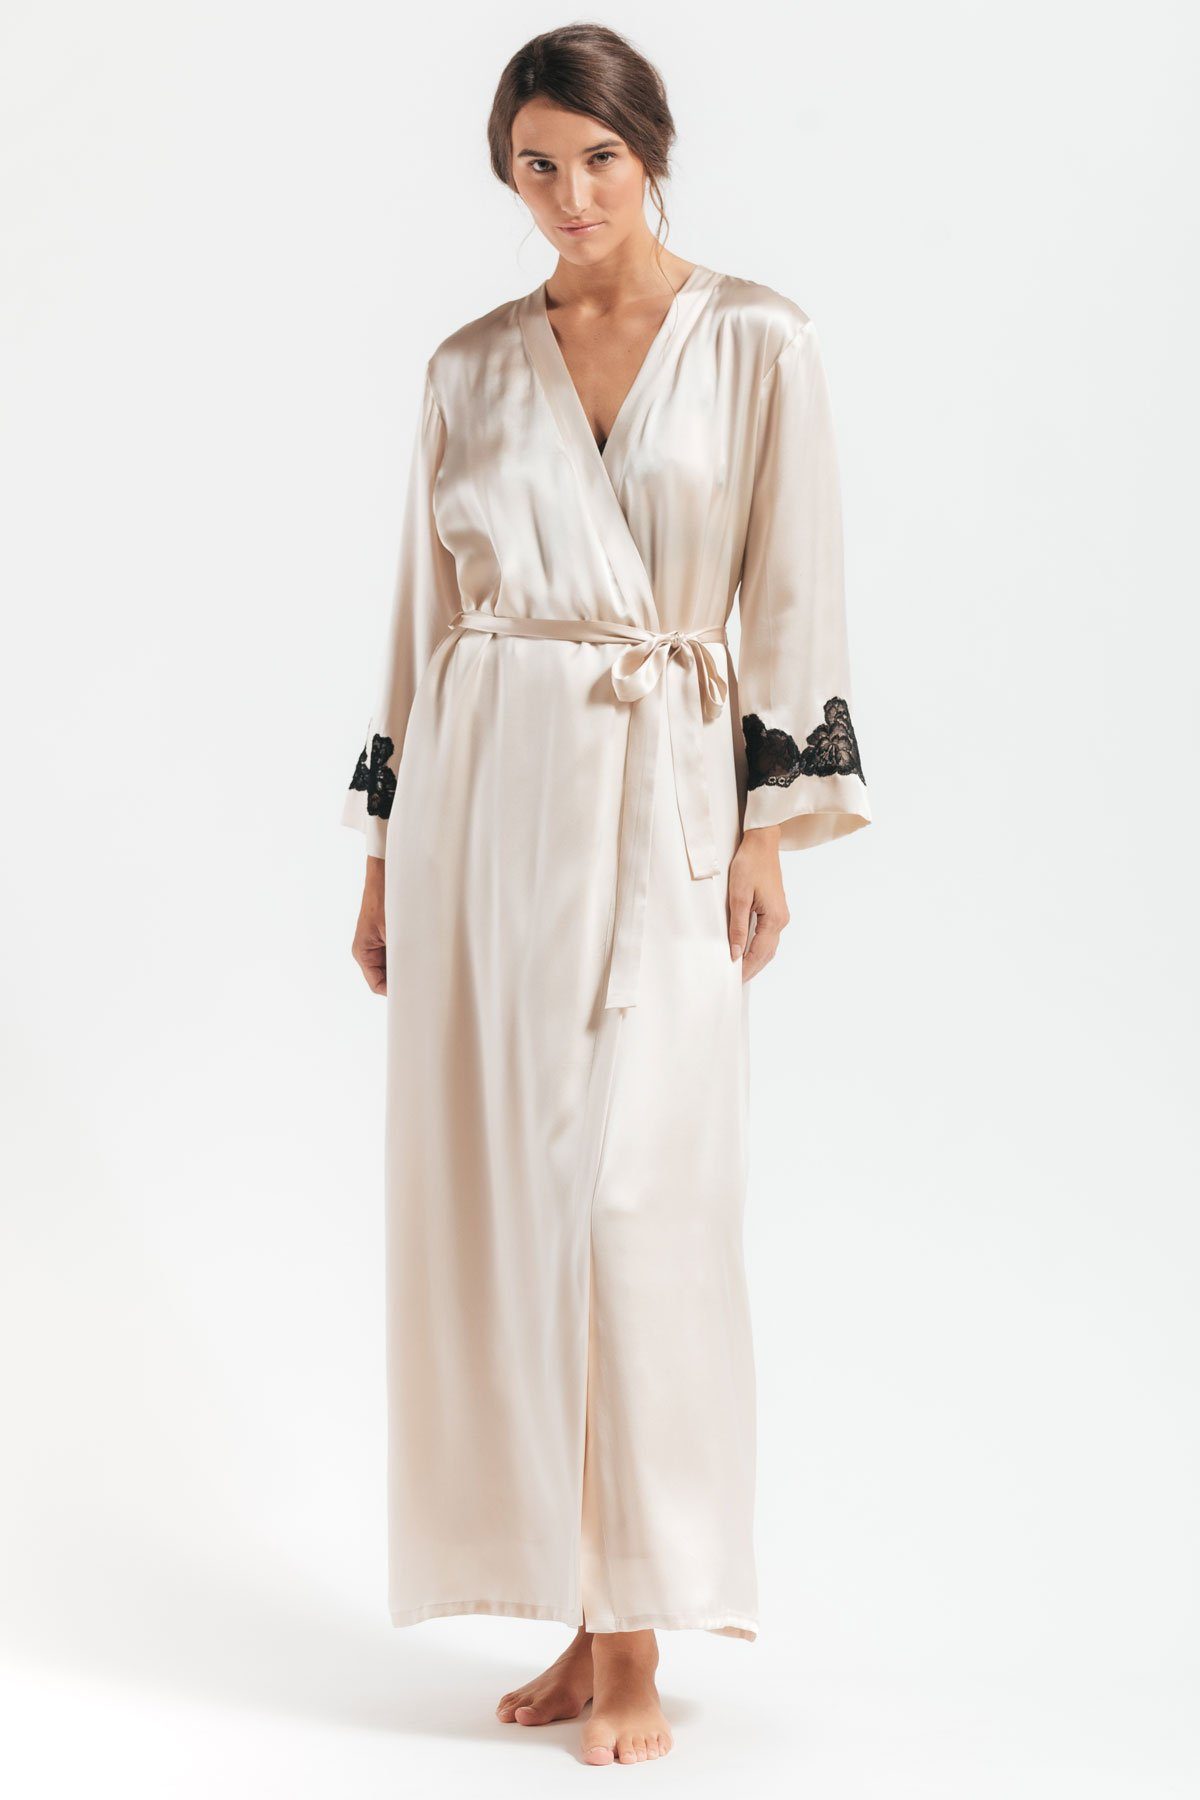 Model wearing a closed Morgan Long silk robe in champagne